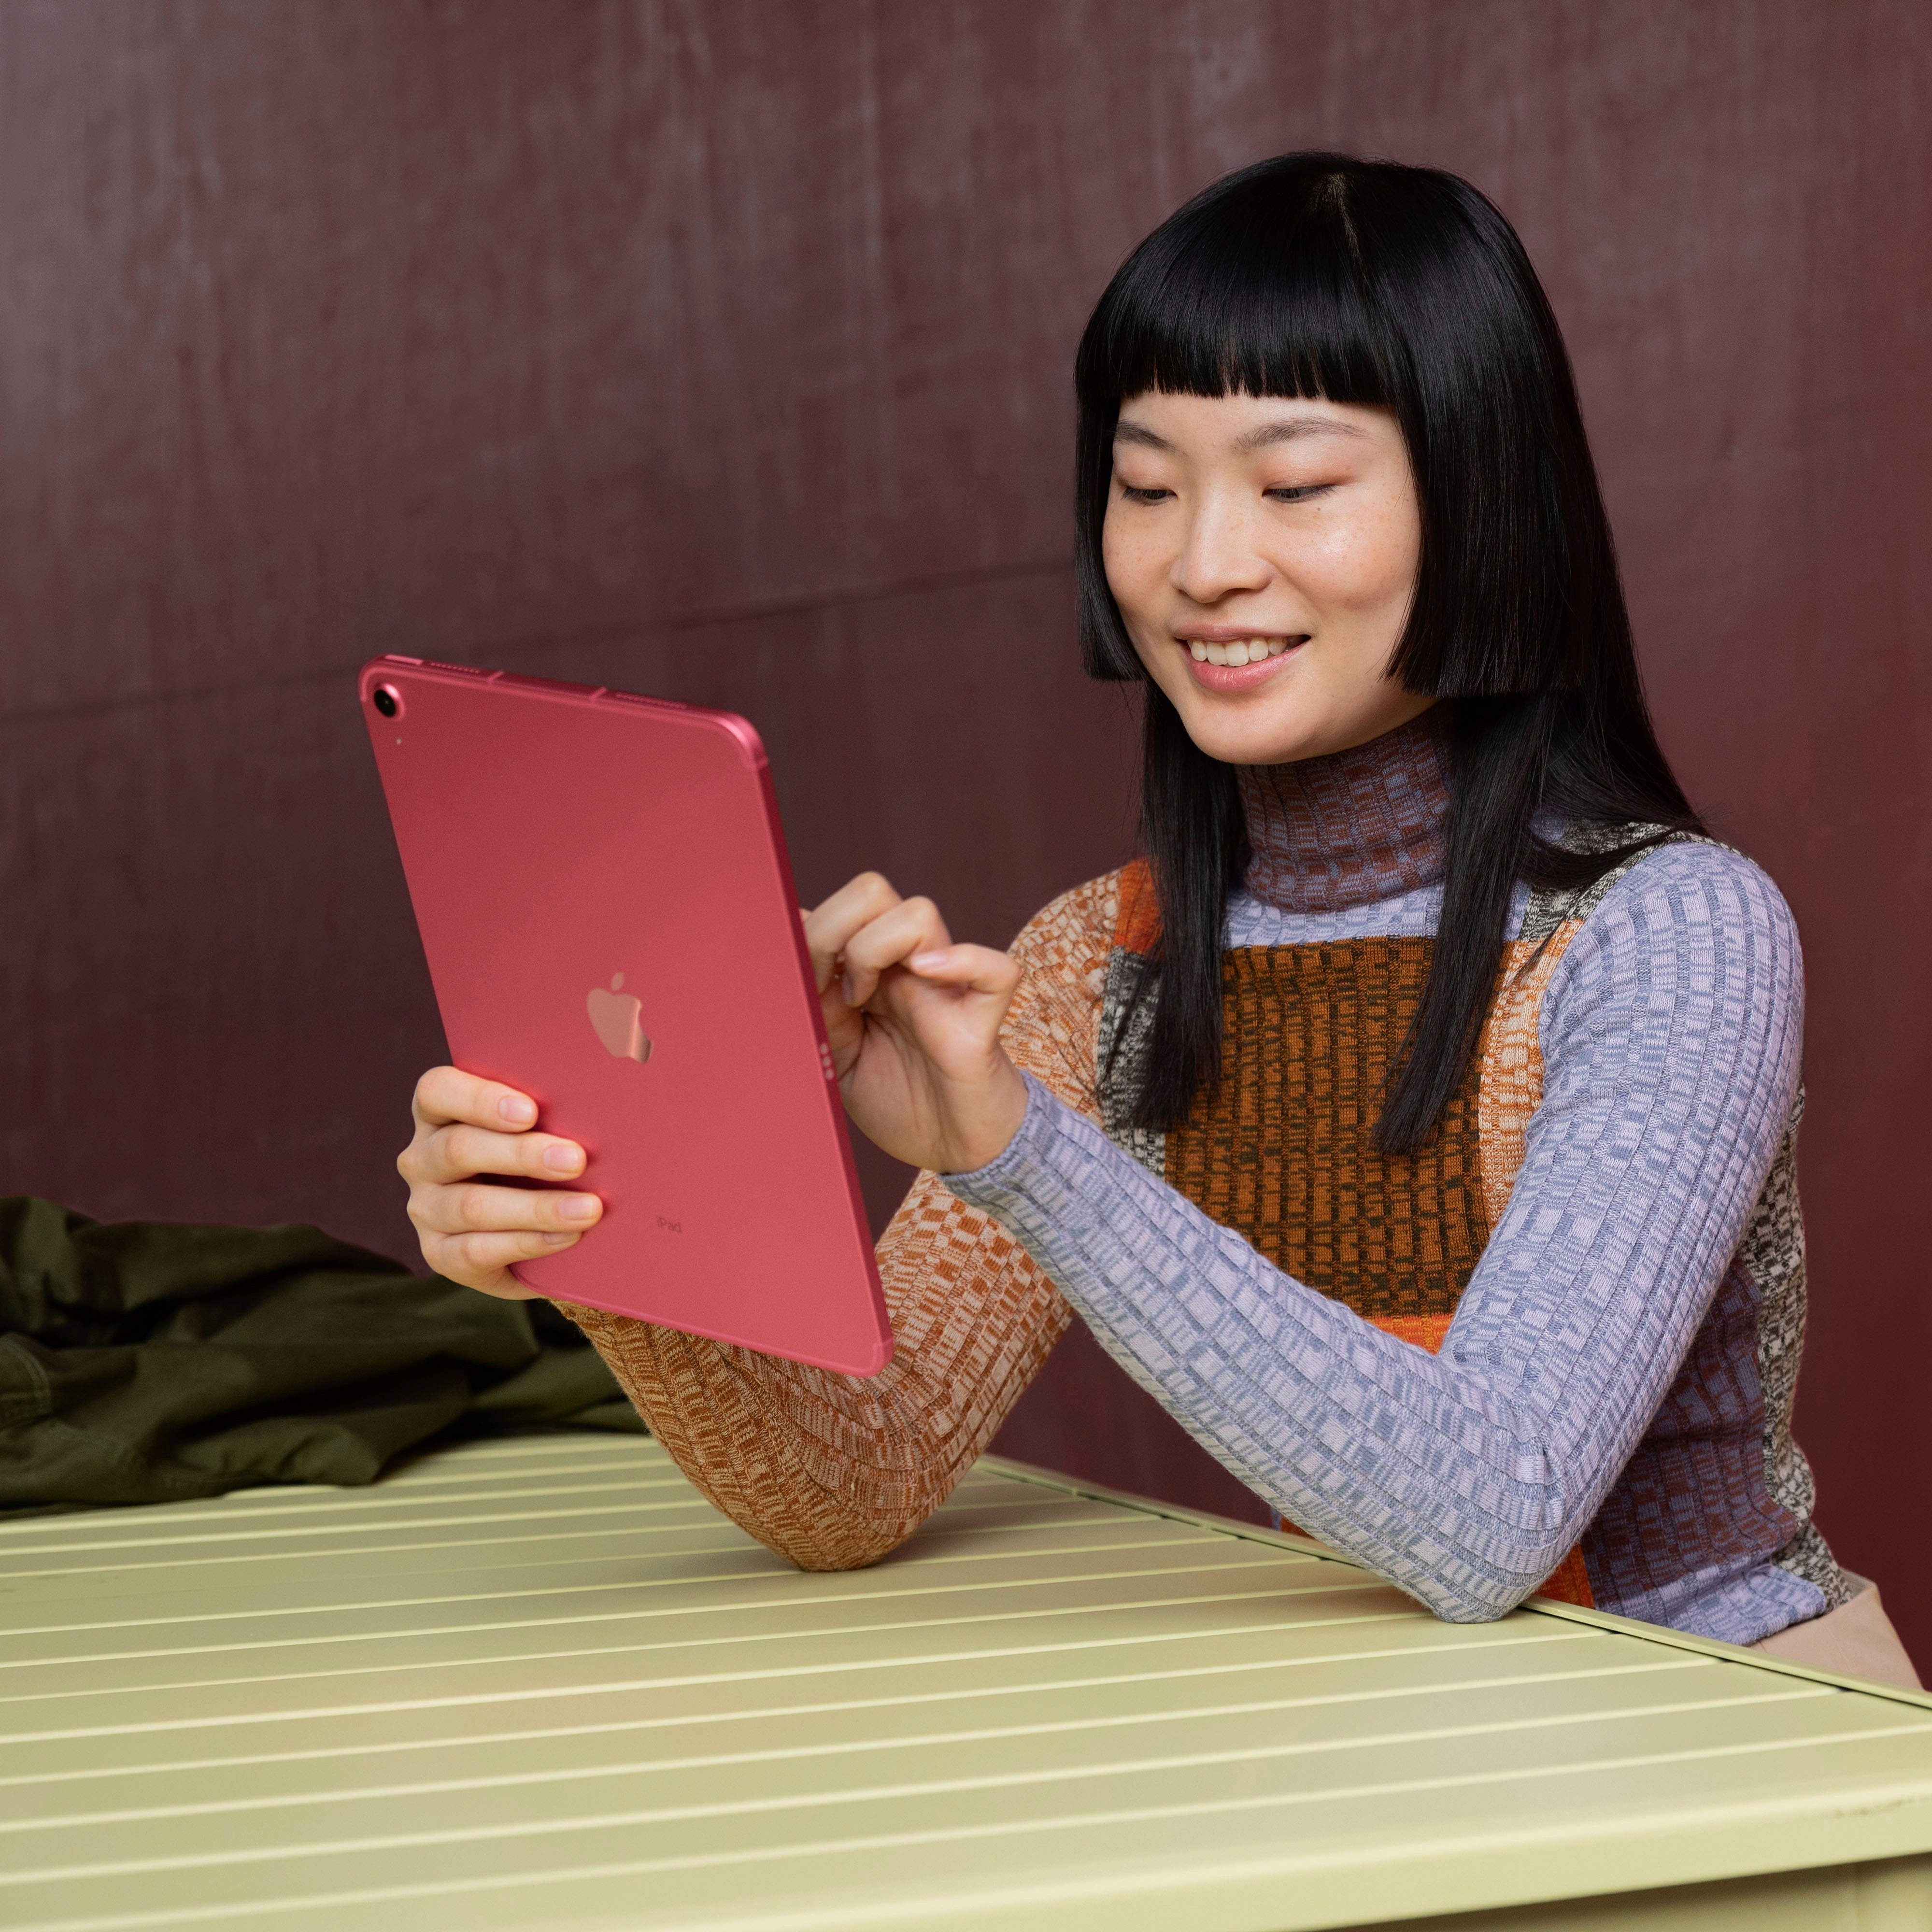 64 iPad iPadOS) pink Generation) GB, Tablet 2022 (10,9", (10 Apple Wi-Fi